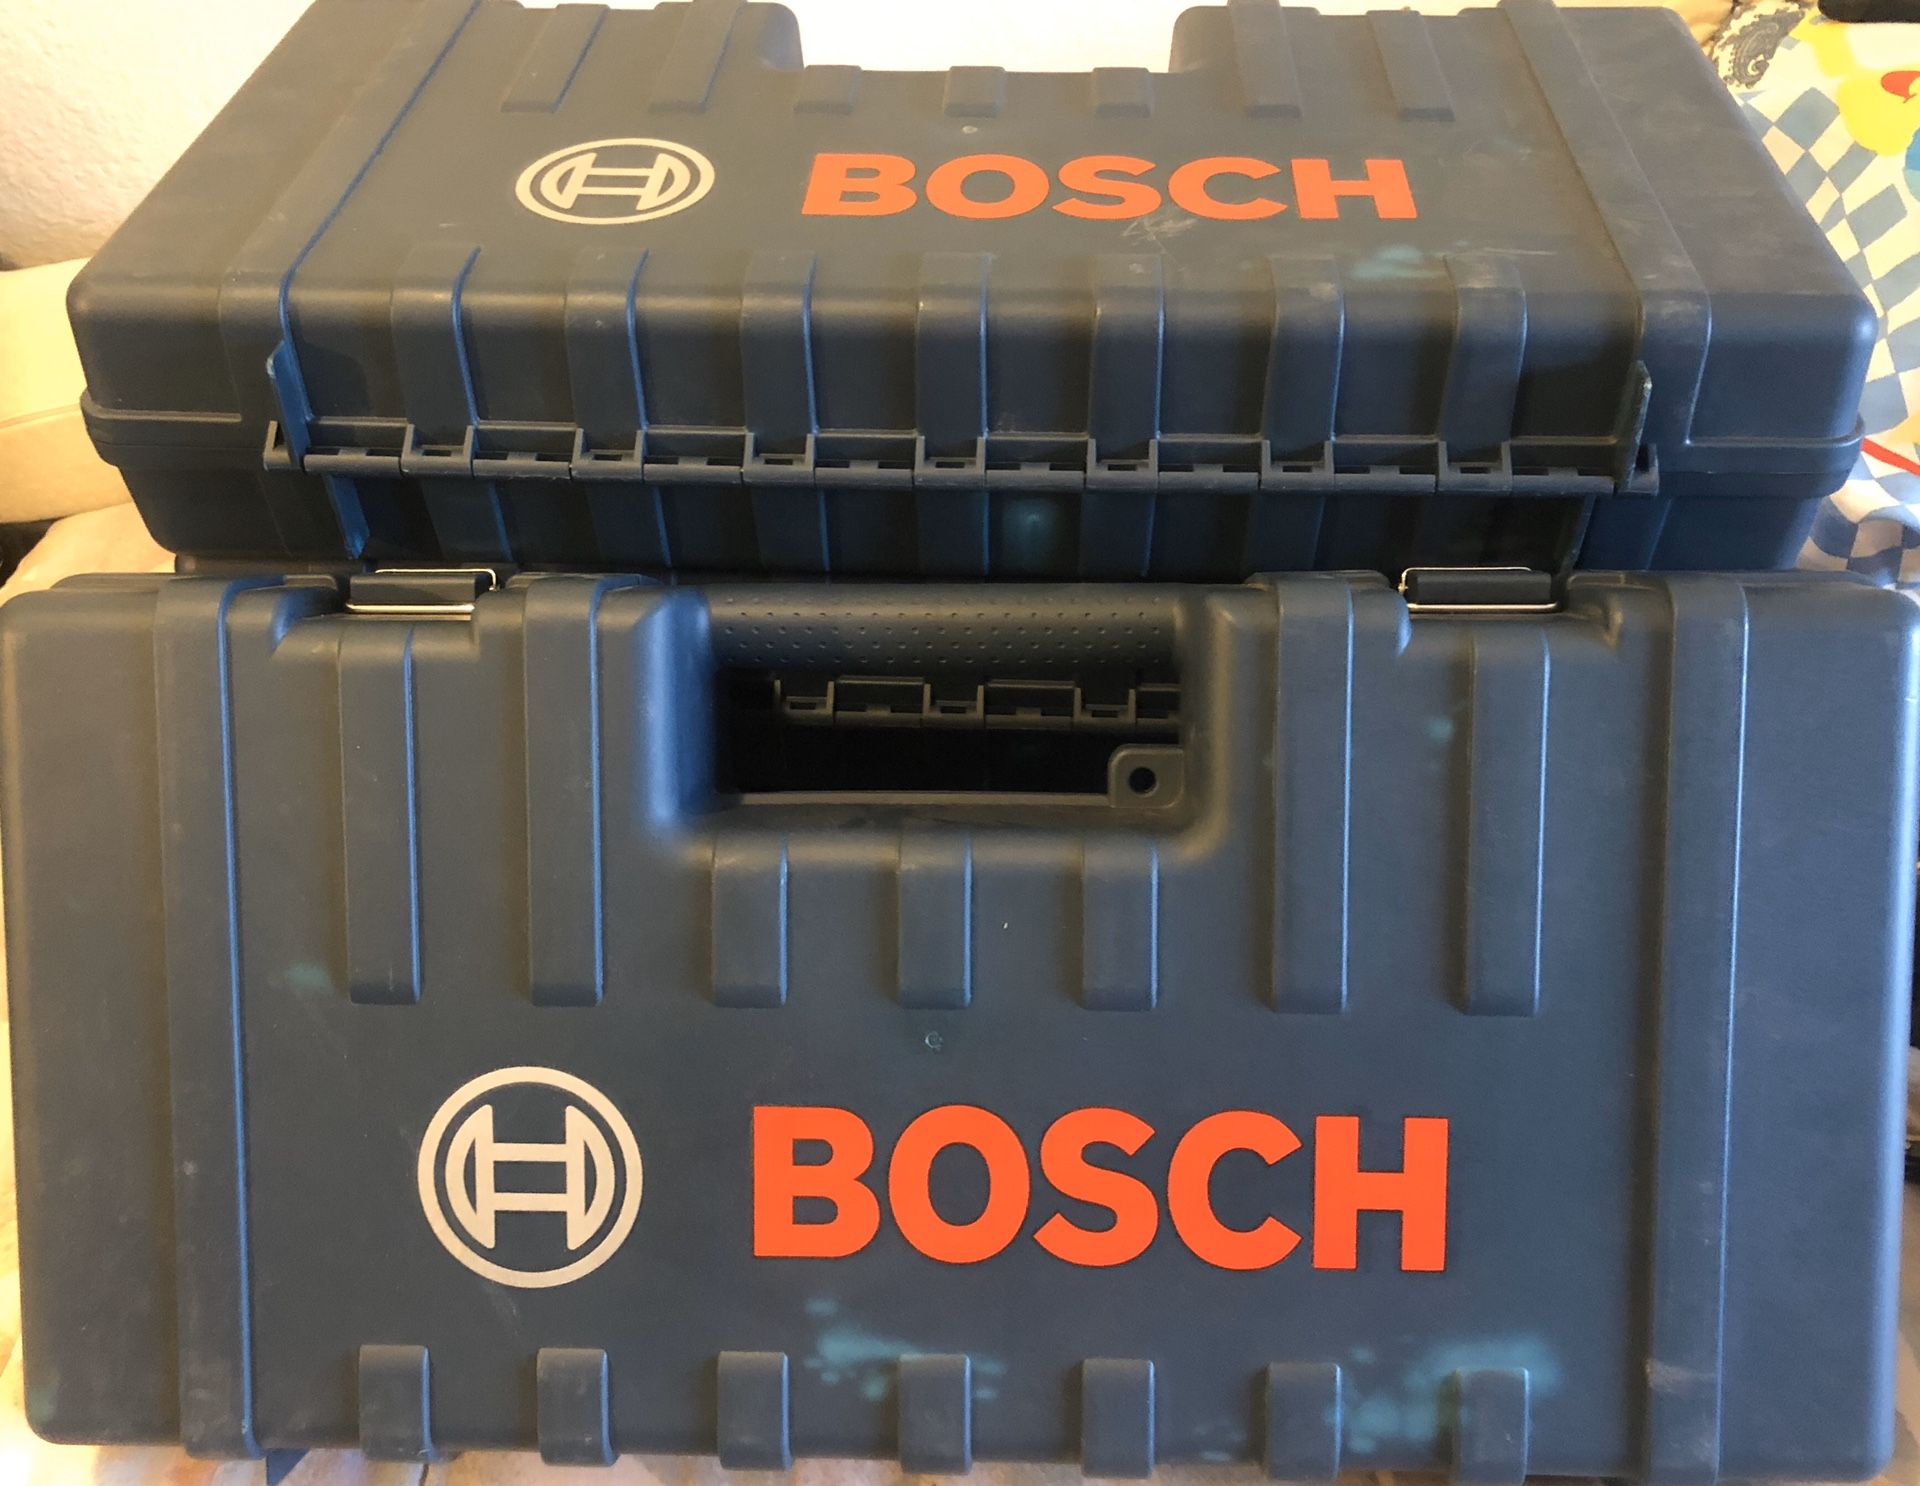 Bosch Rotary Hammer Tool Box